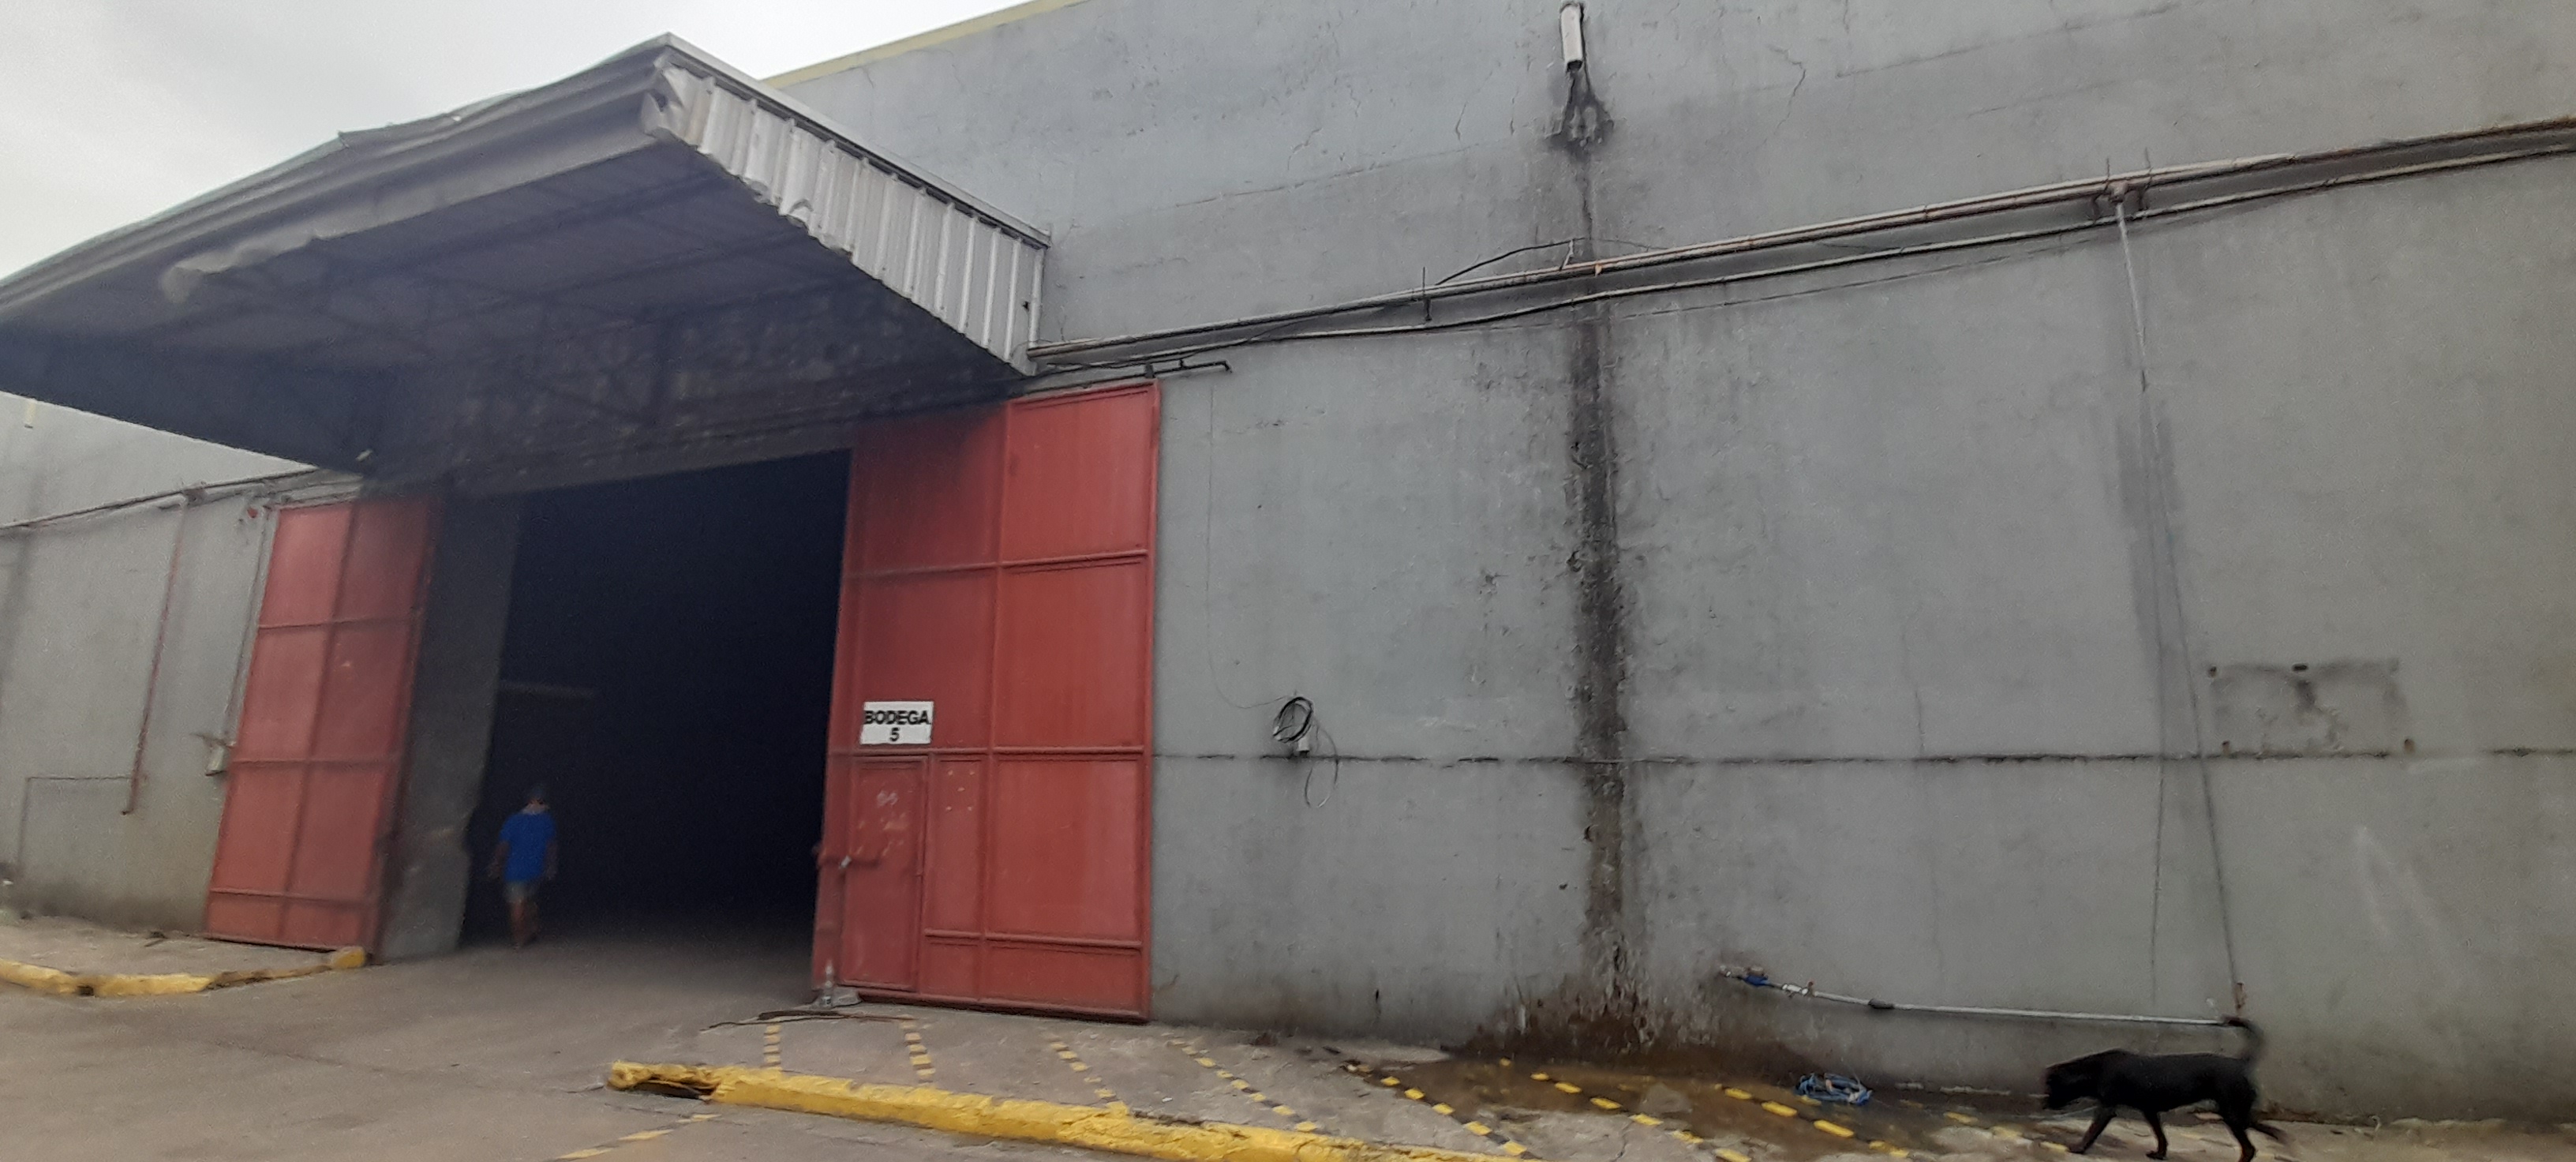 80440-square-meters-warehouse-in-cebu-city